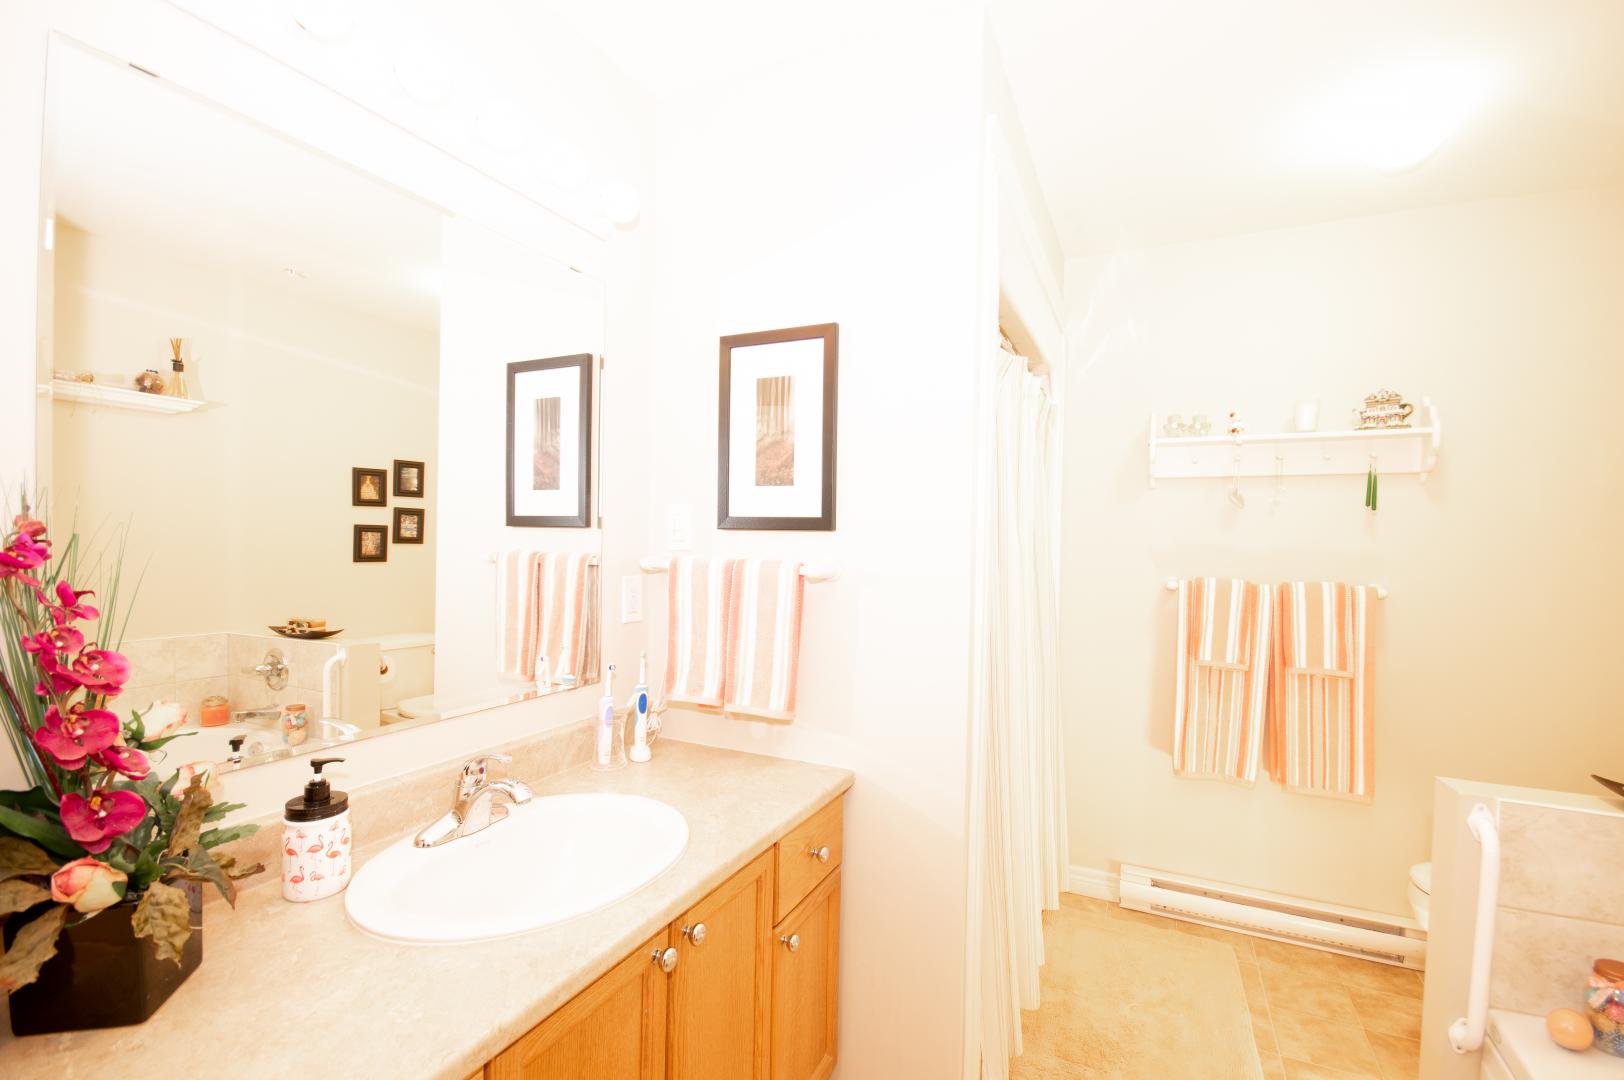 300 Reynolds Street Apartment Bathroom Image